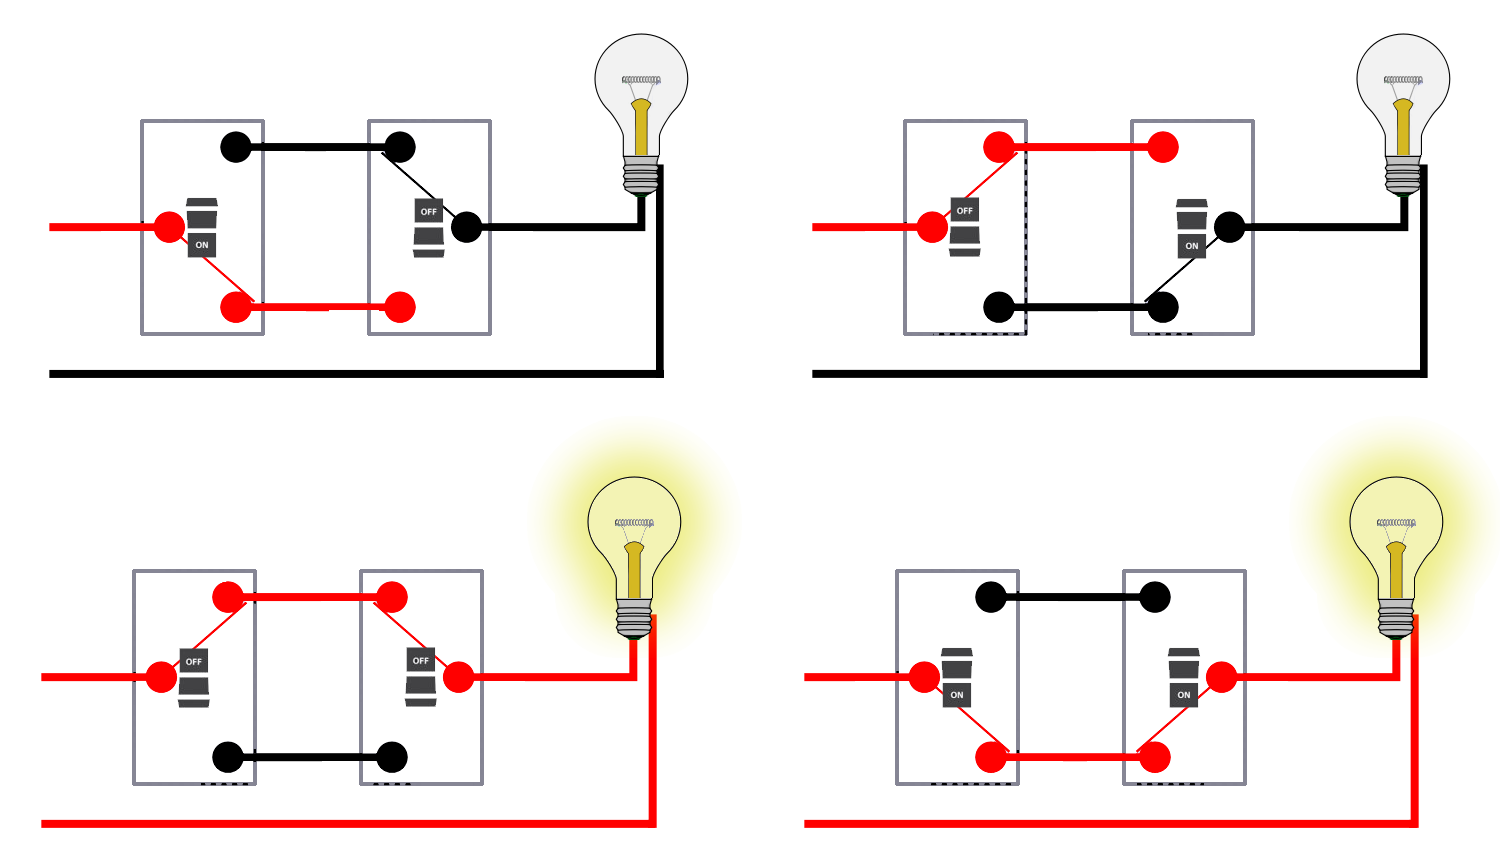 Funcionamento da lâmpada via Interruptor Paralelo